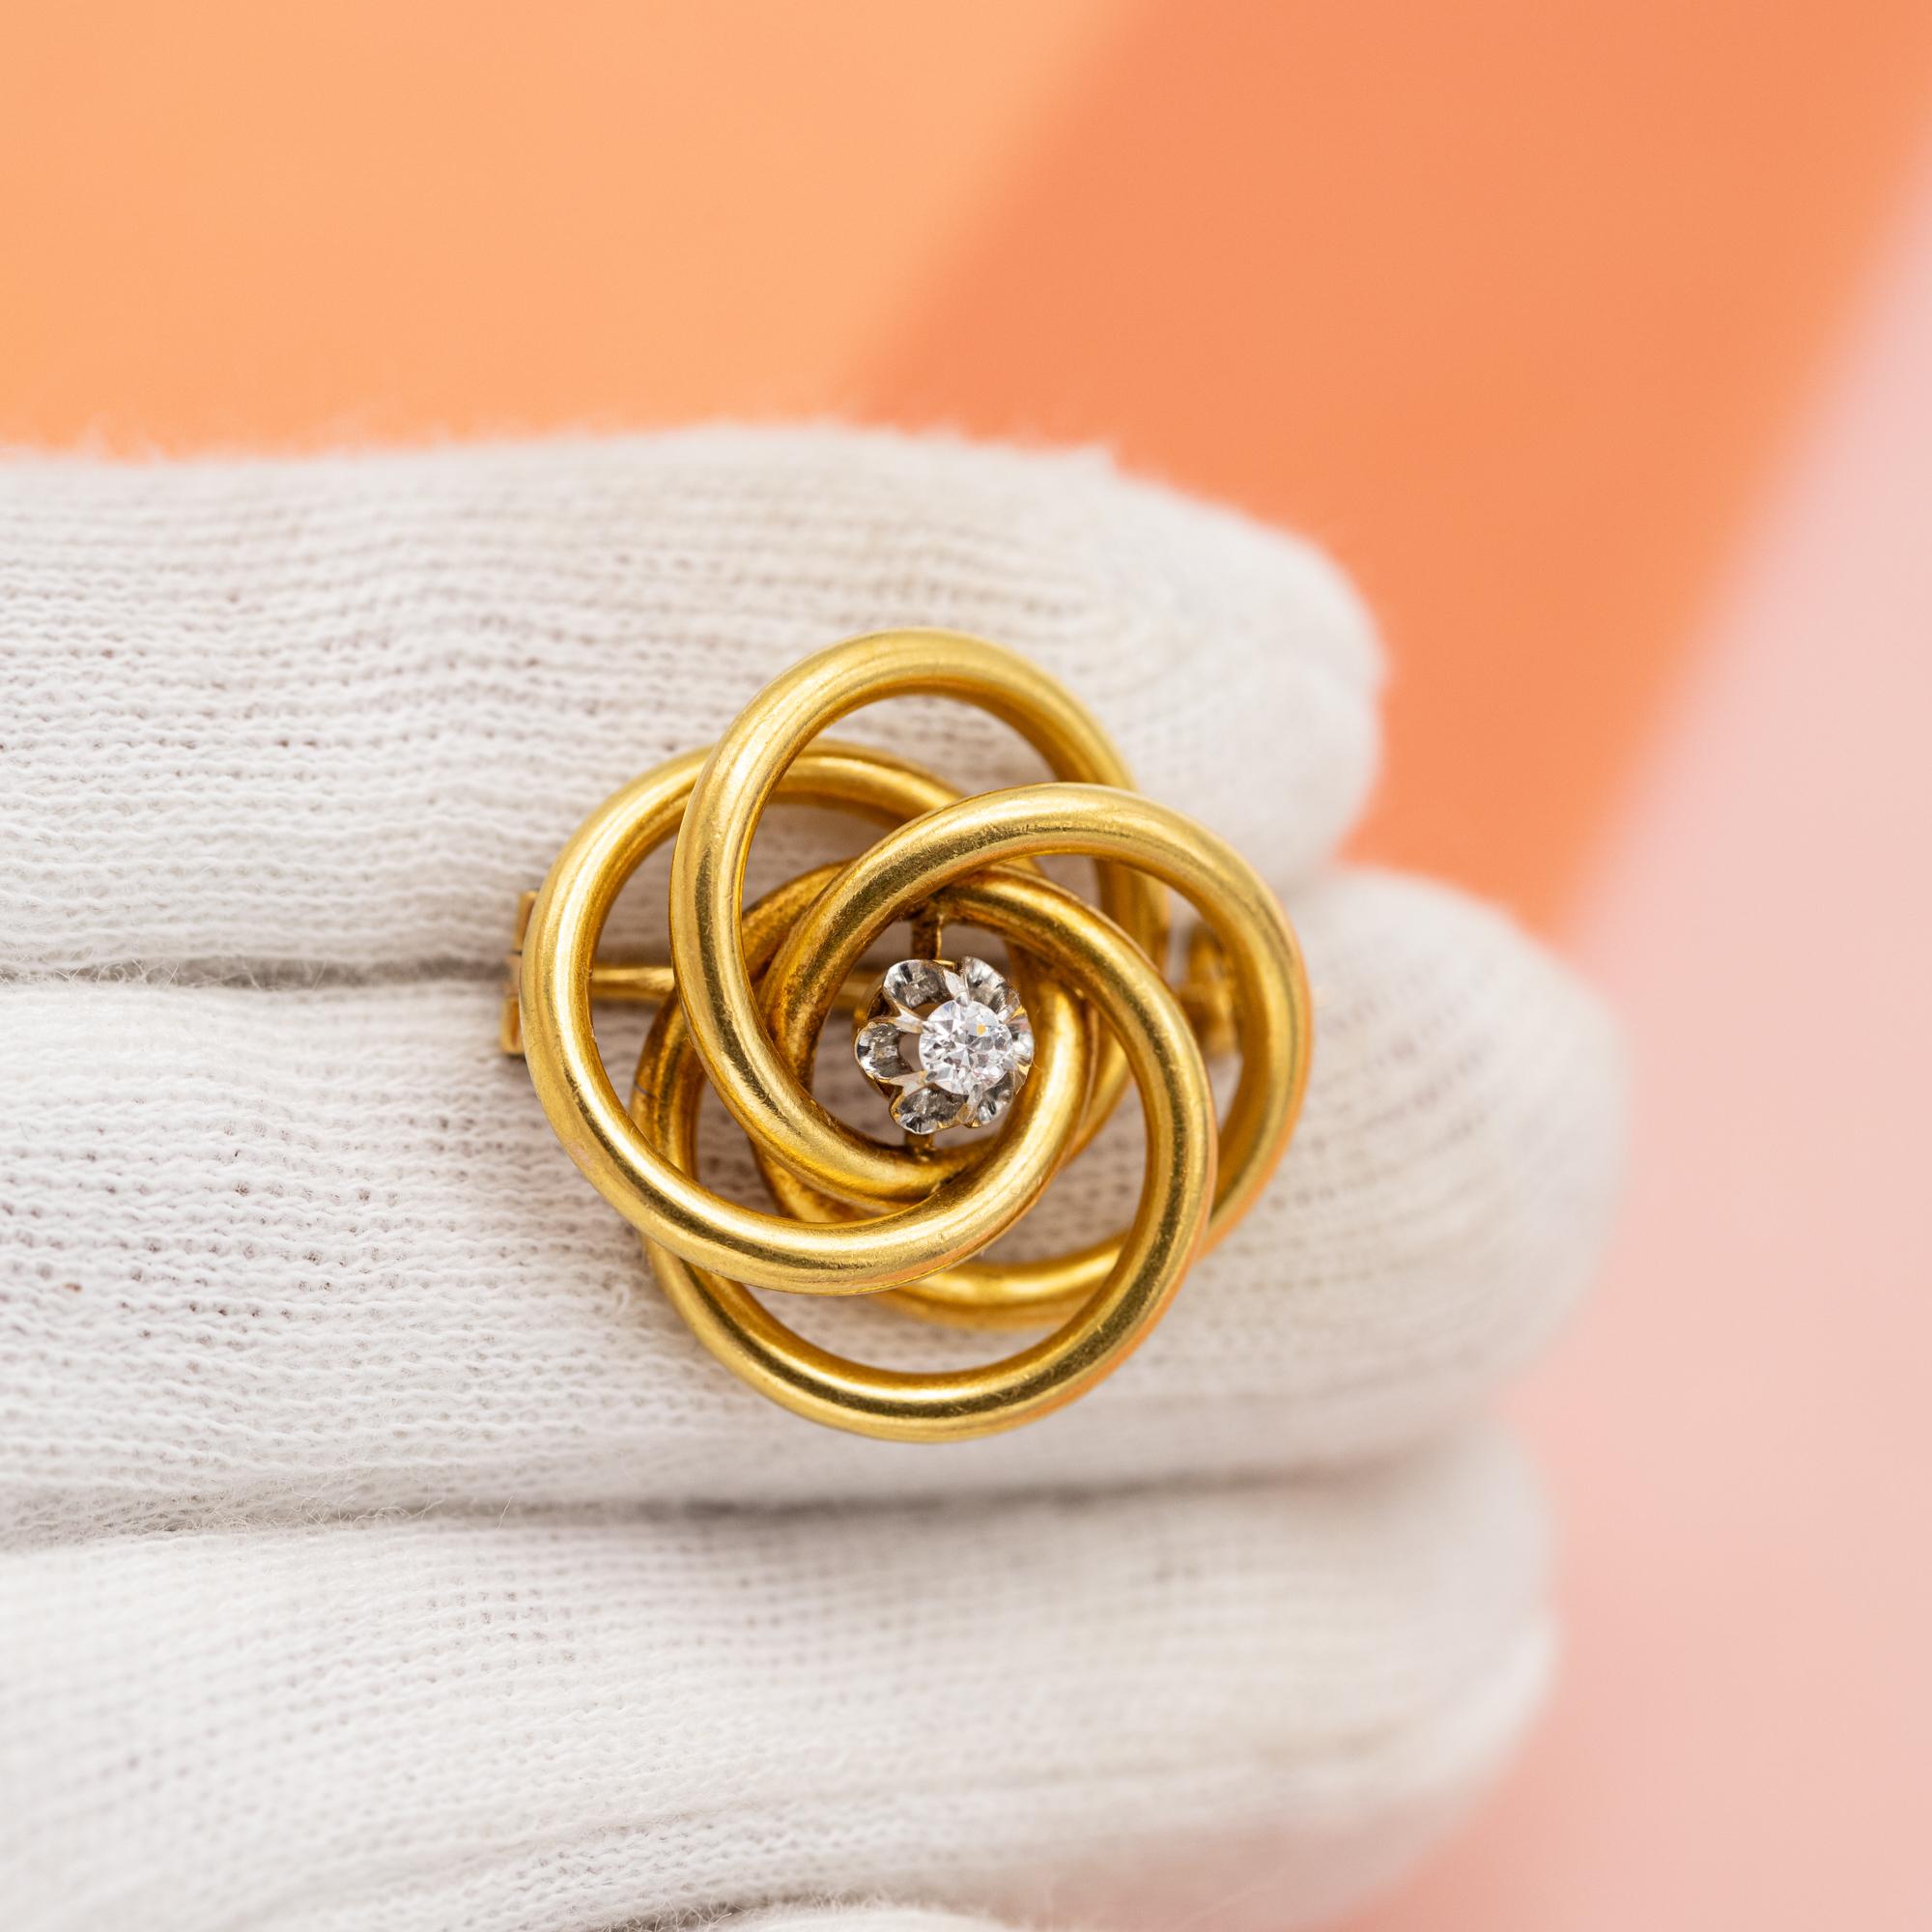 Women's or Men's 18k French Art Nouveau brooch - Late Victorian love jewelry, diamond lovers knot